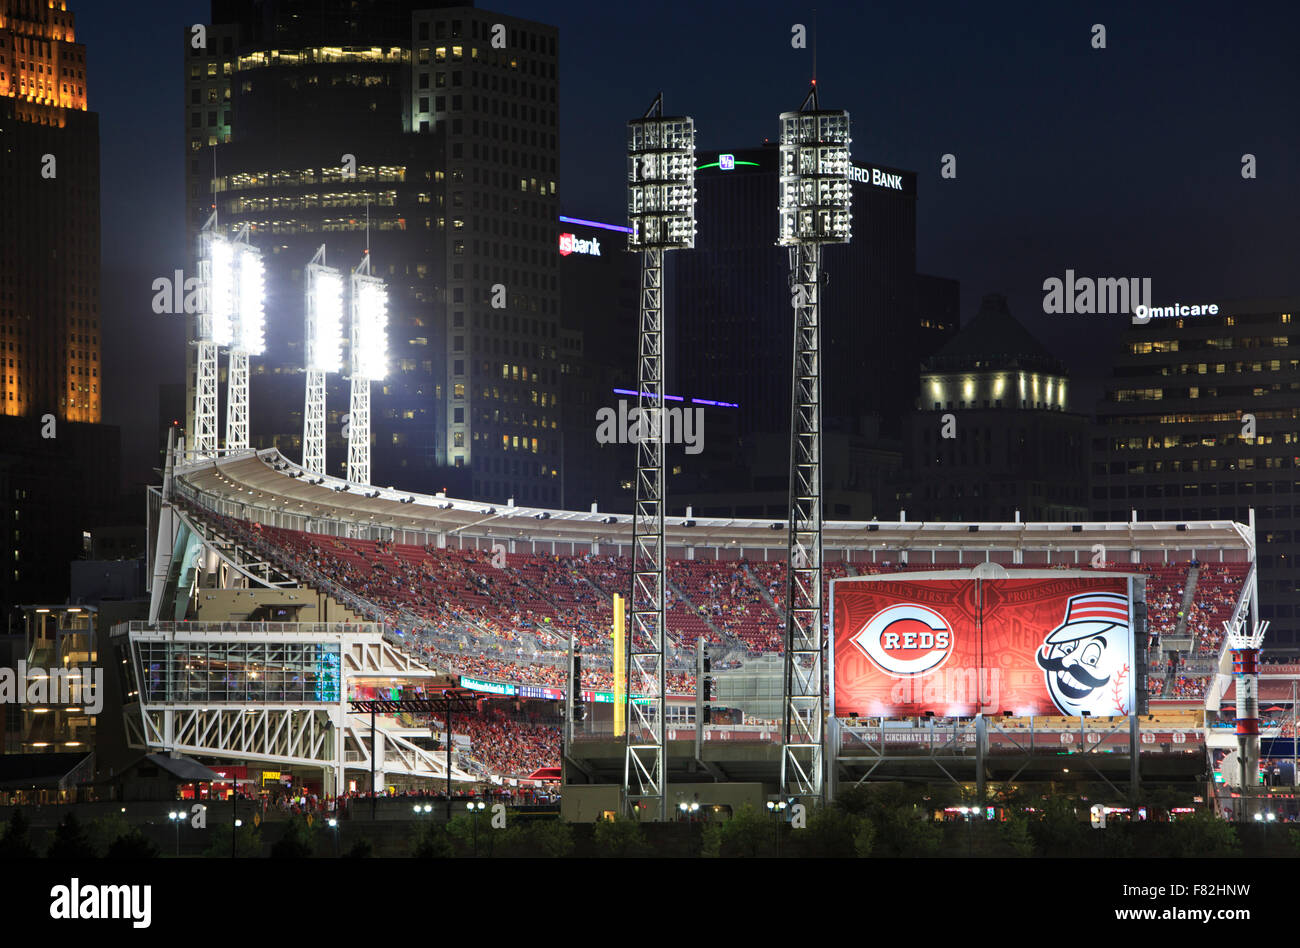 Great American Ball Park, home of the Cincinnati Reds (American Professional baseball team). Stock Photo